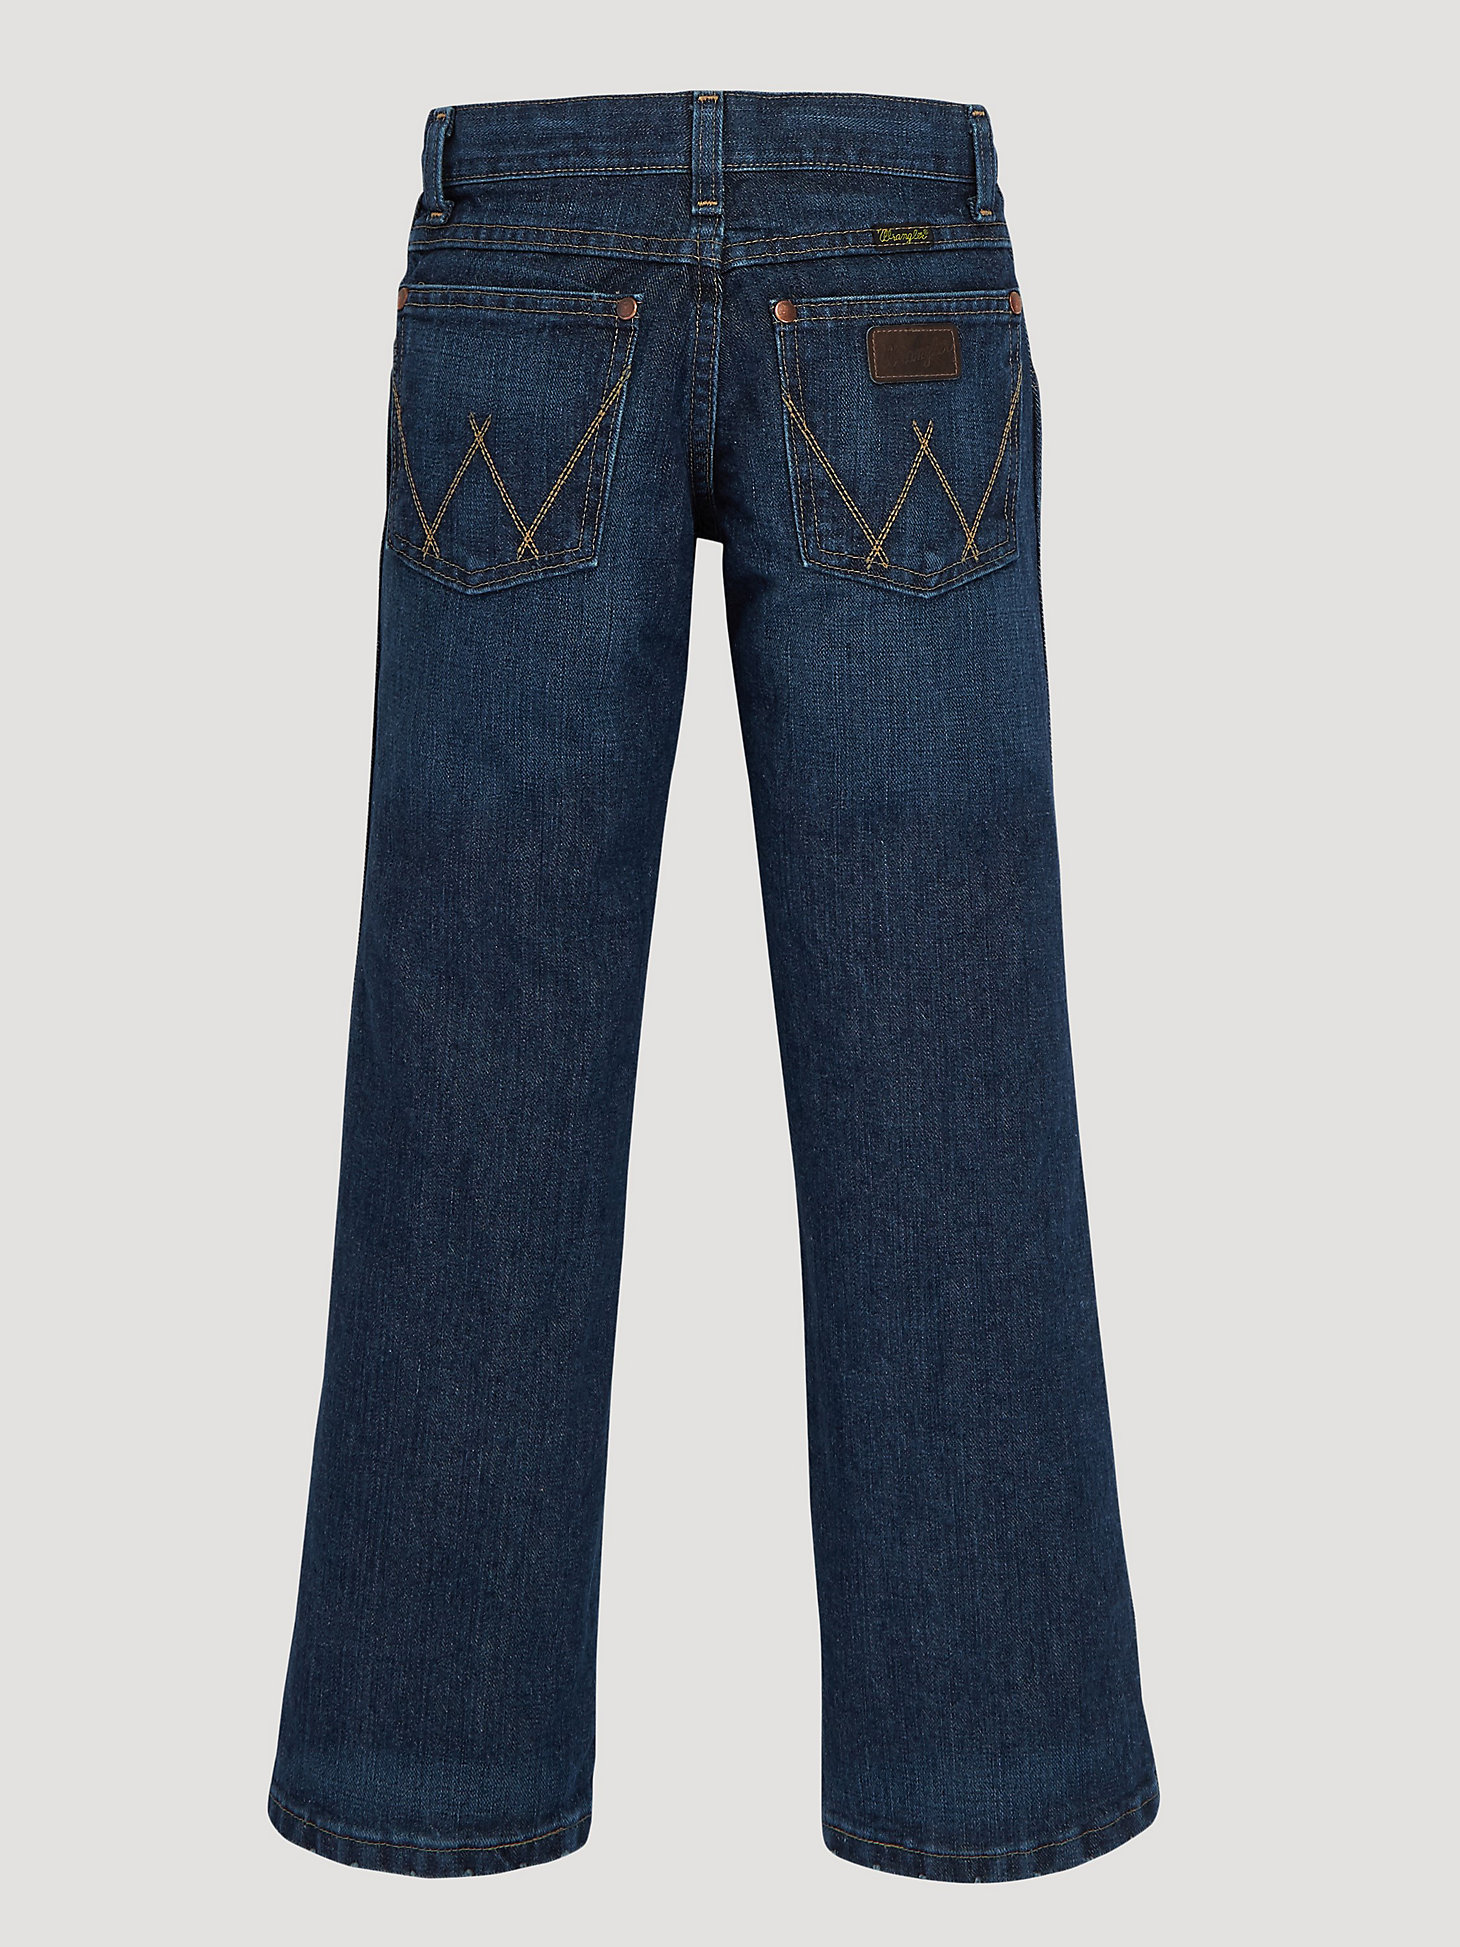 Boy's Wrangler Retro® Straight Fit Jean (8-16) in Everyday Blue alternative view 1